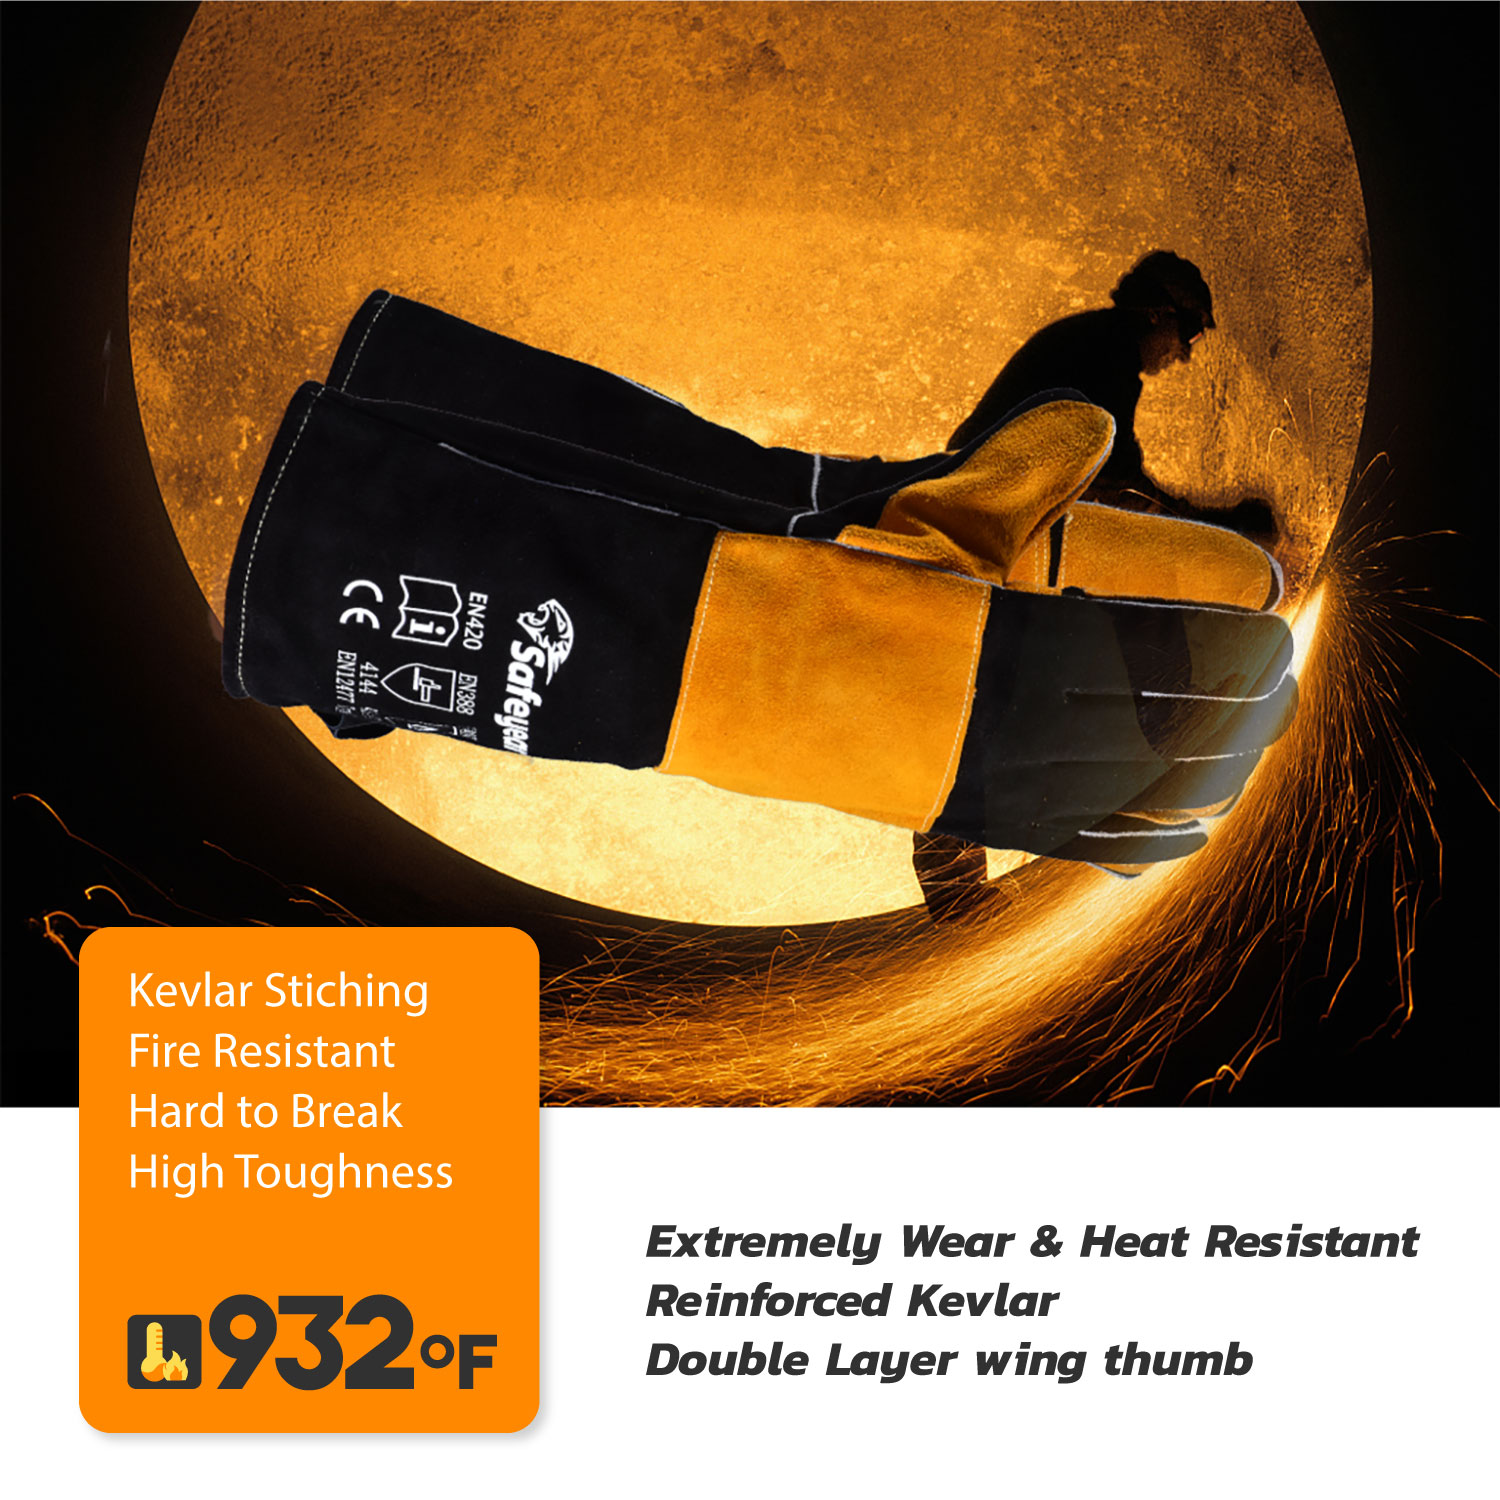 Heat Resistant Welding Work Gloves FL-1023 Black